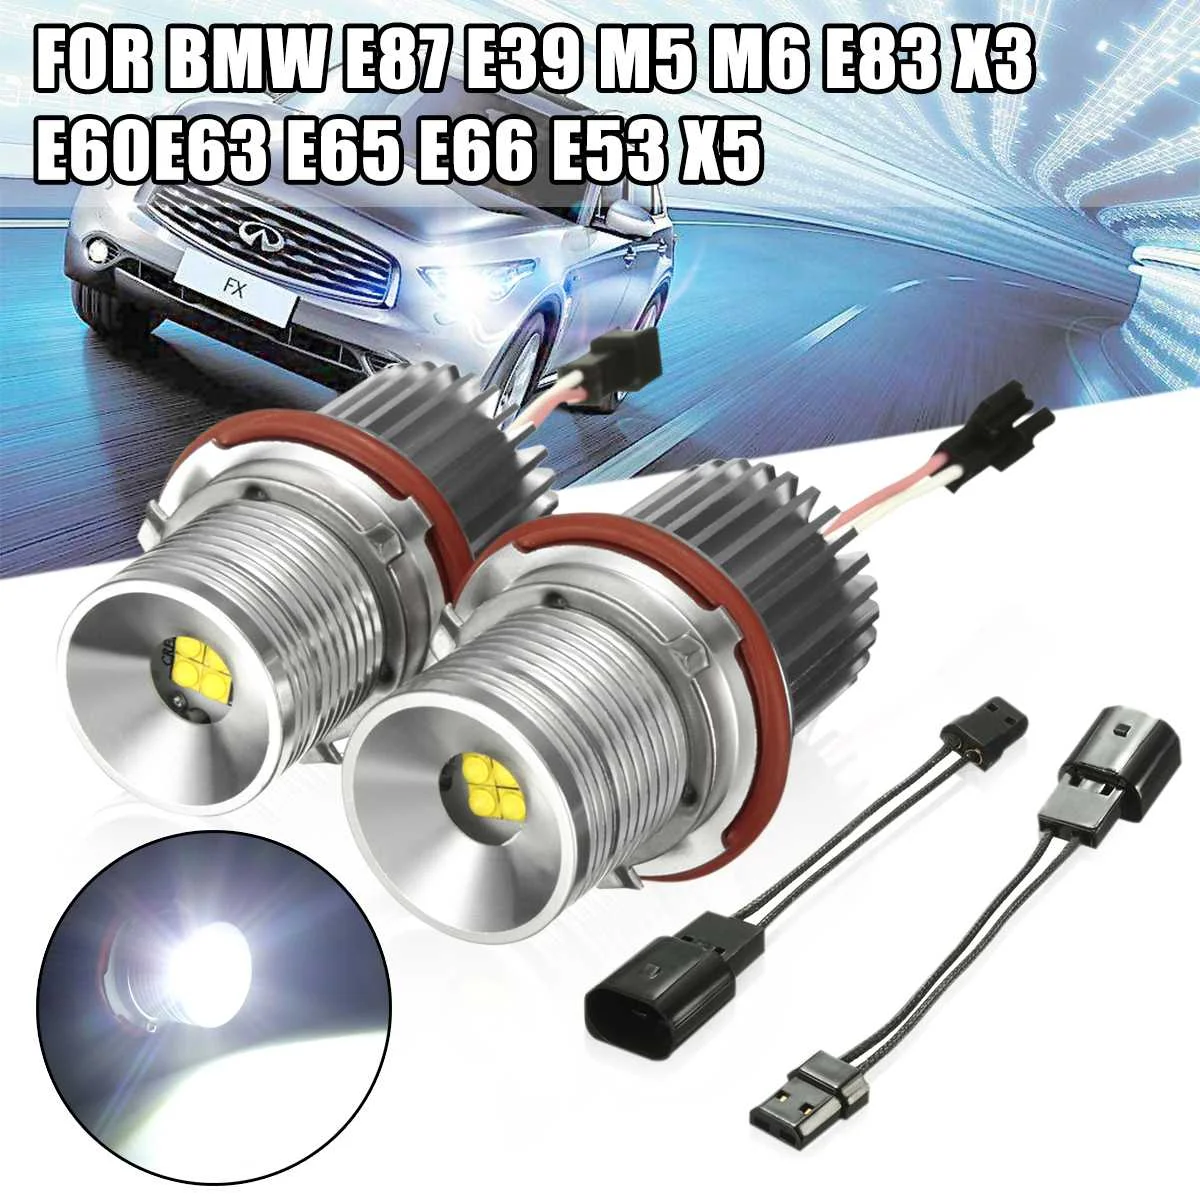 

2pcs 45w White Angle Eyes LED Marker HALO Ring Light Bulb For BMW E39 E53 E60 E61 Super Bright Led Energy Save